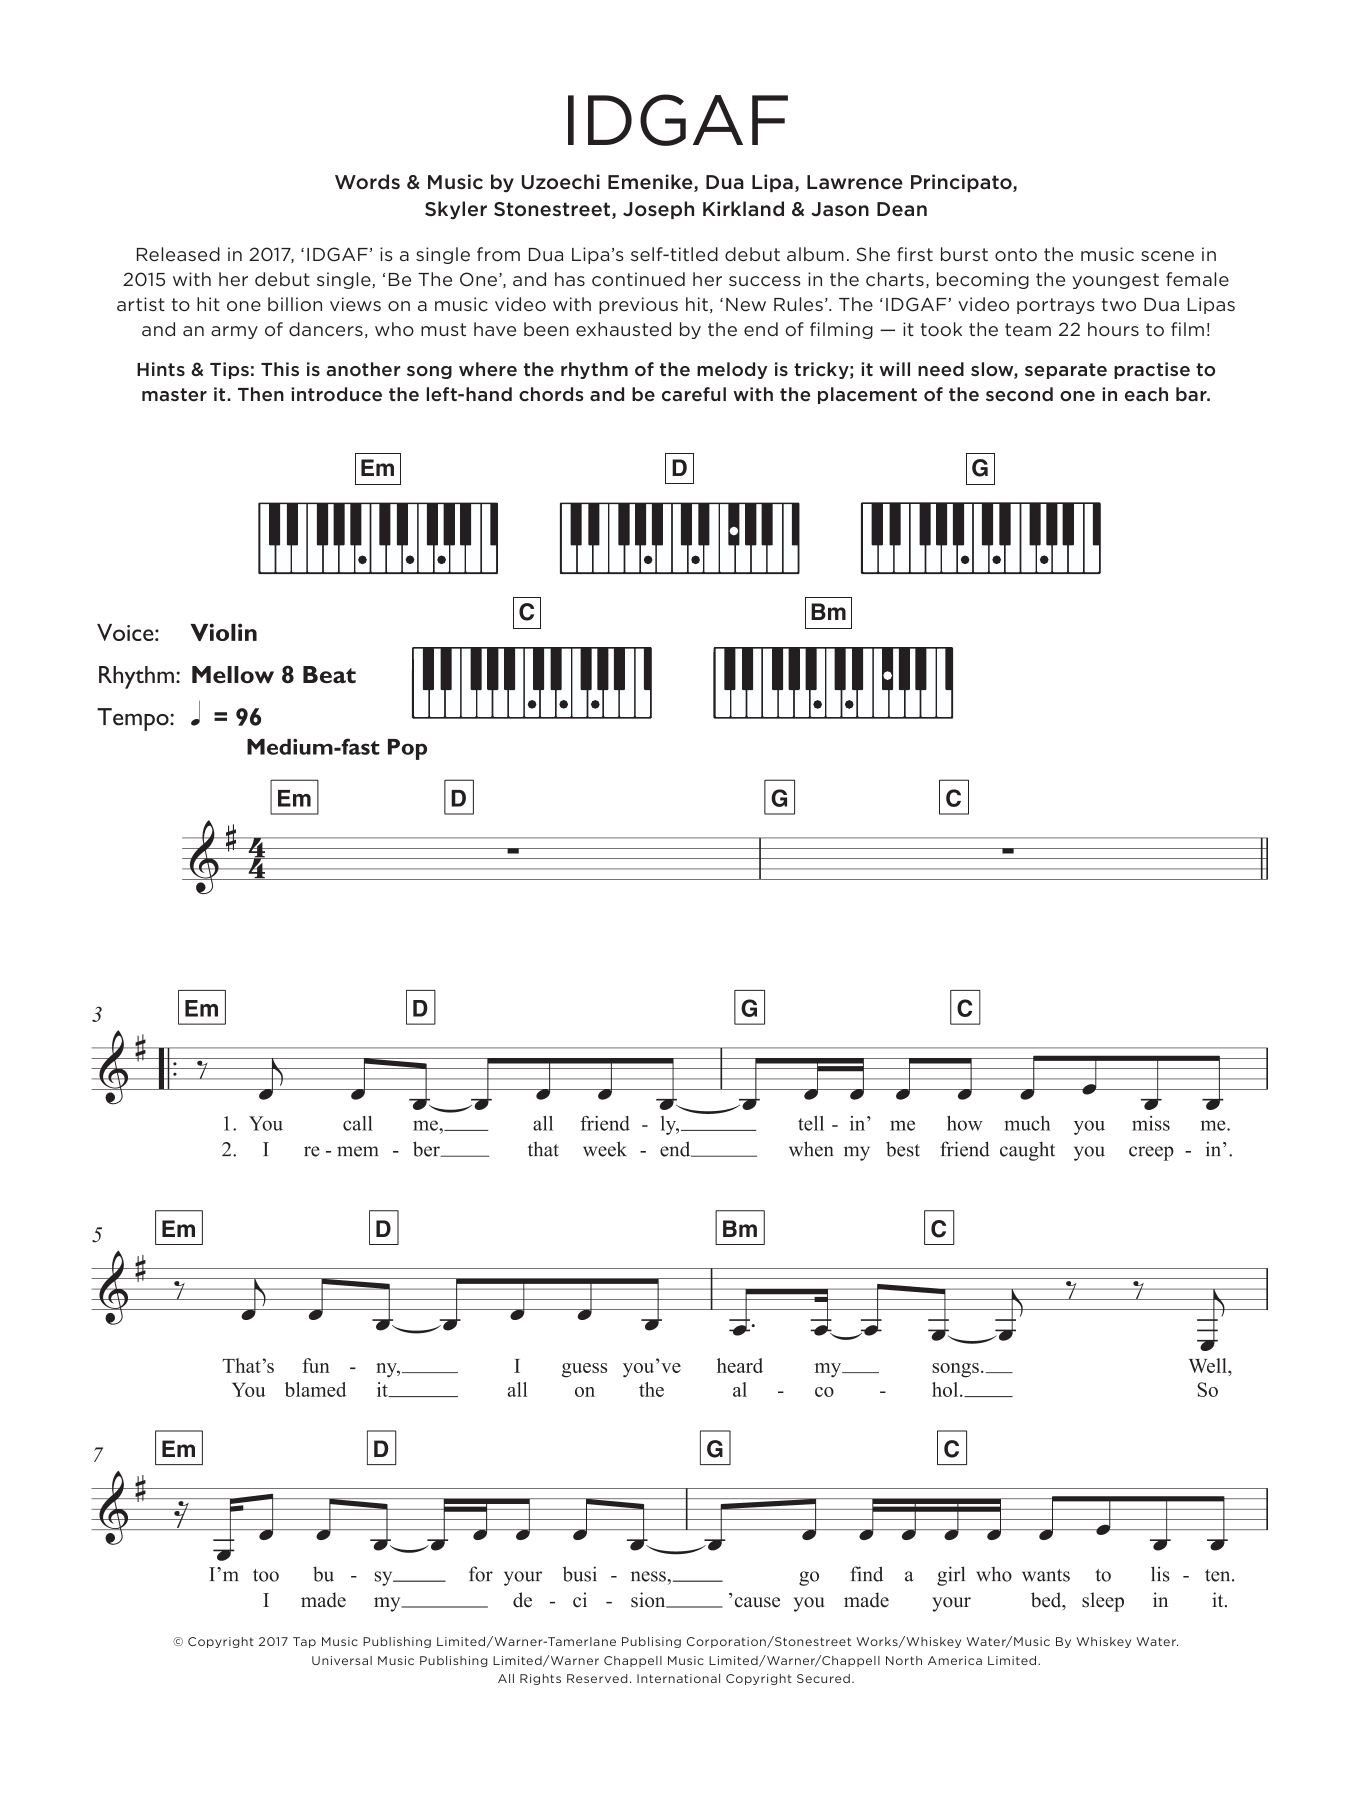 Dua Lipa IDGAF Sheet Music Notes & Chords for Easy Piano - Download or Print PDF